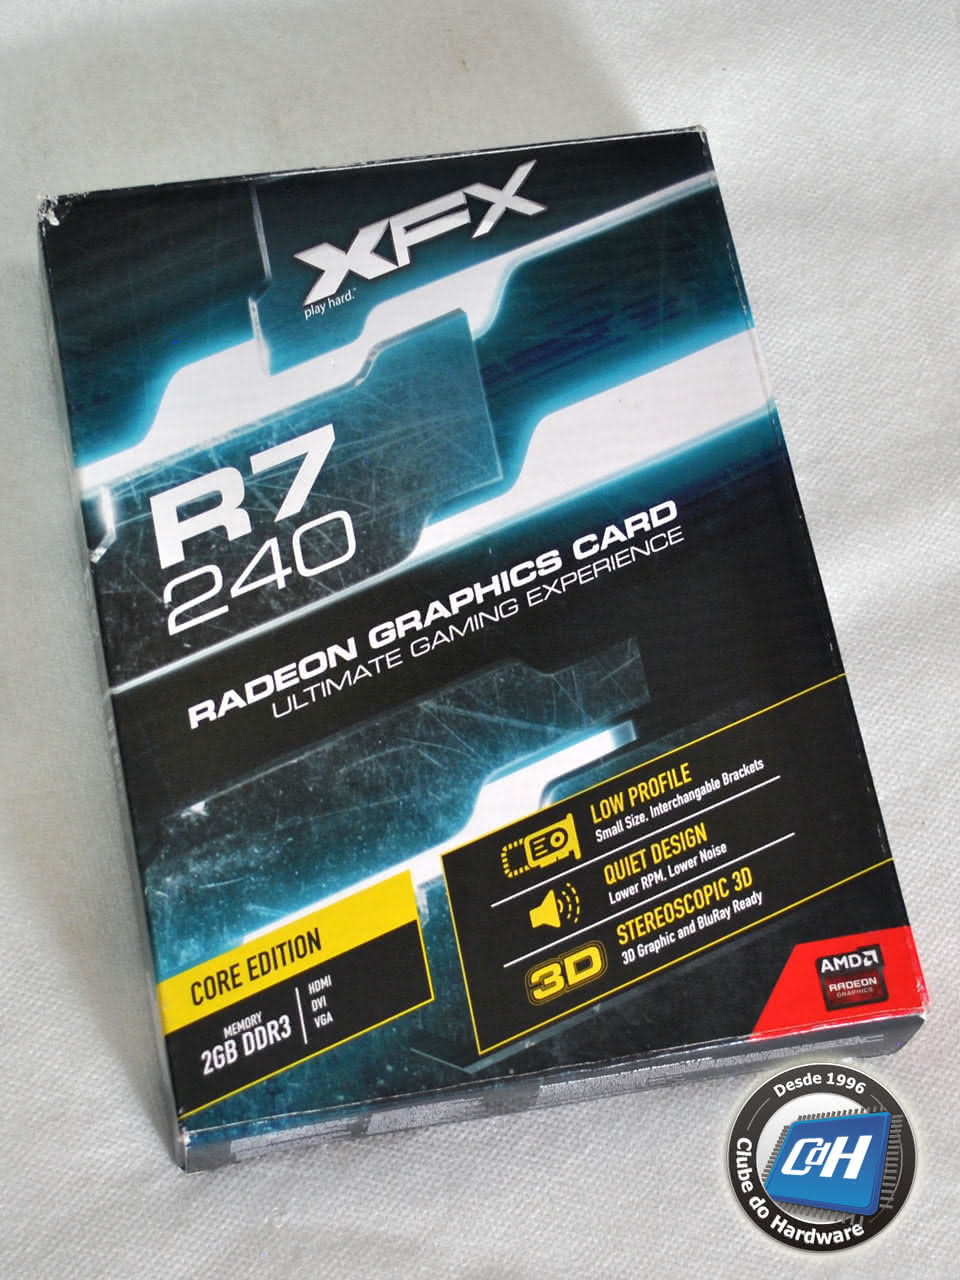 Teste da Placa de Vídeo XFX Radeon R7 240 Core Edition